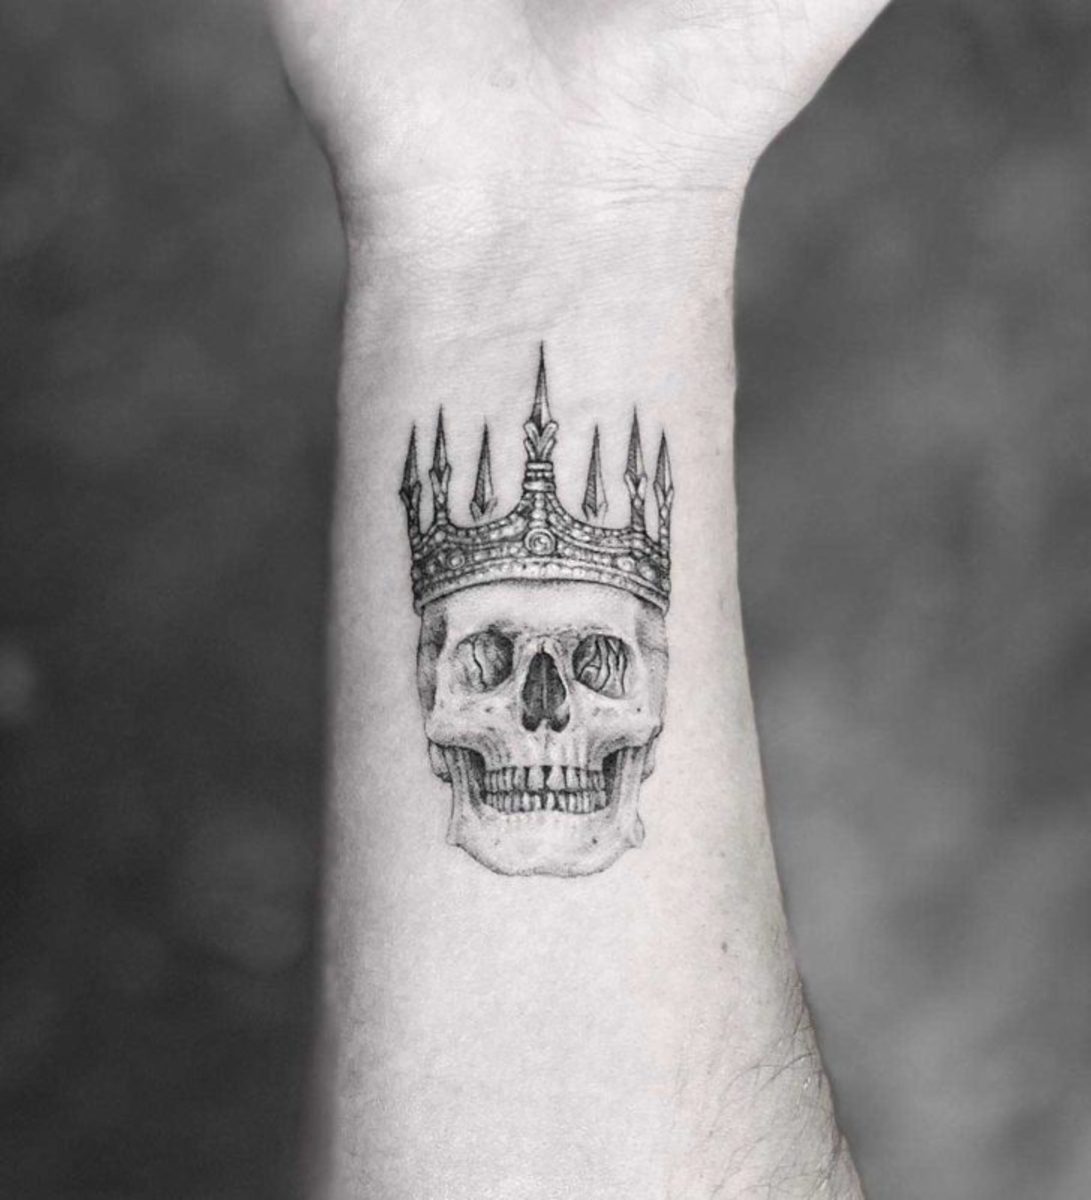 Skull-in-Crown-Tattoo-by-Mr.K-728x801